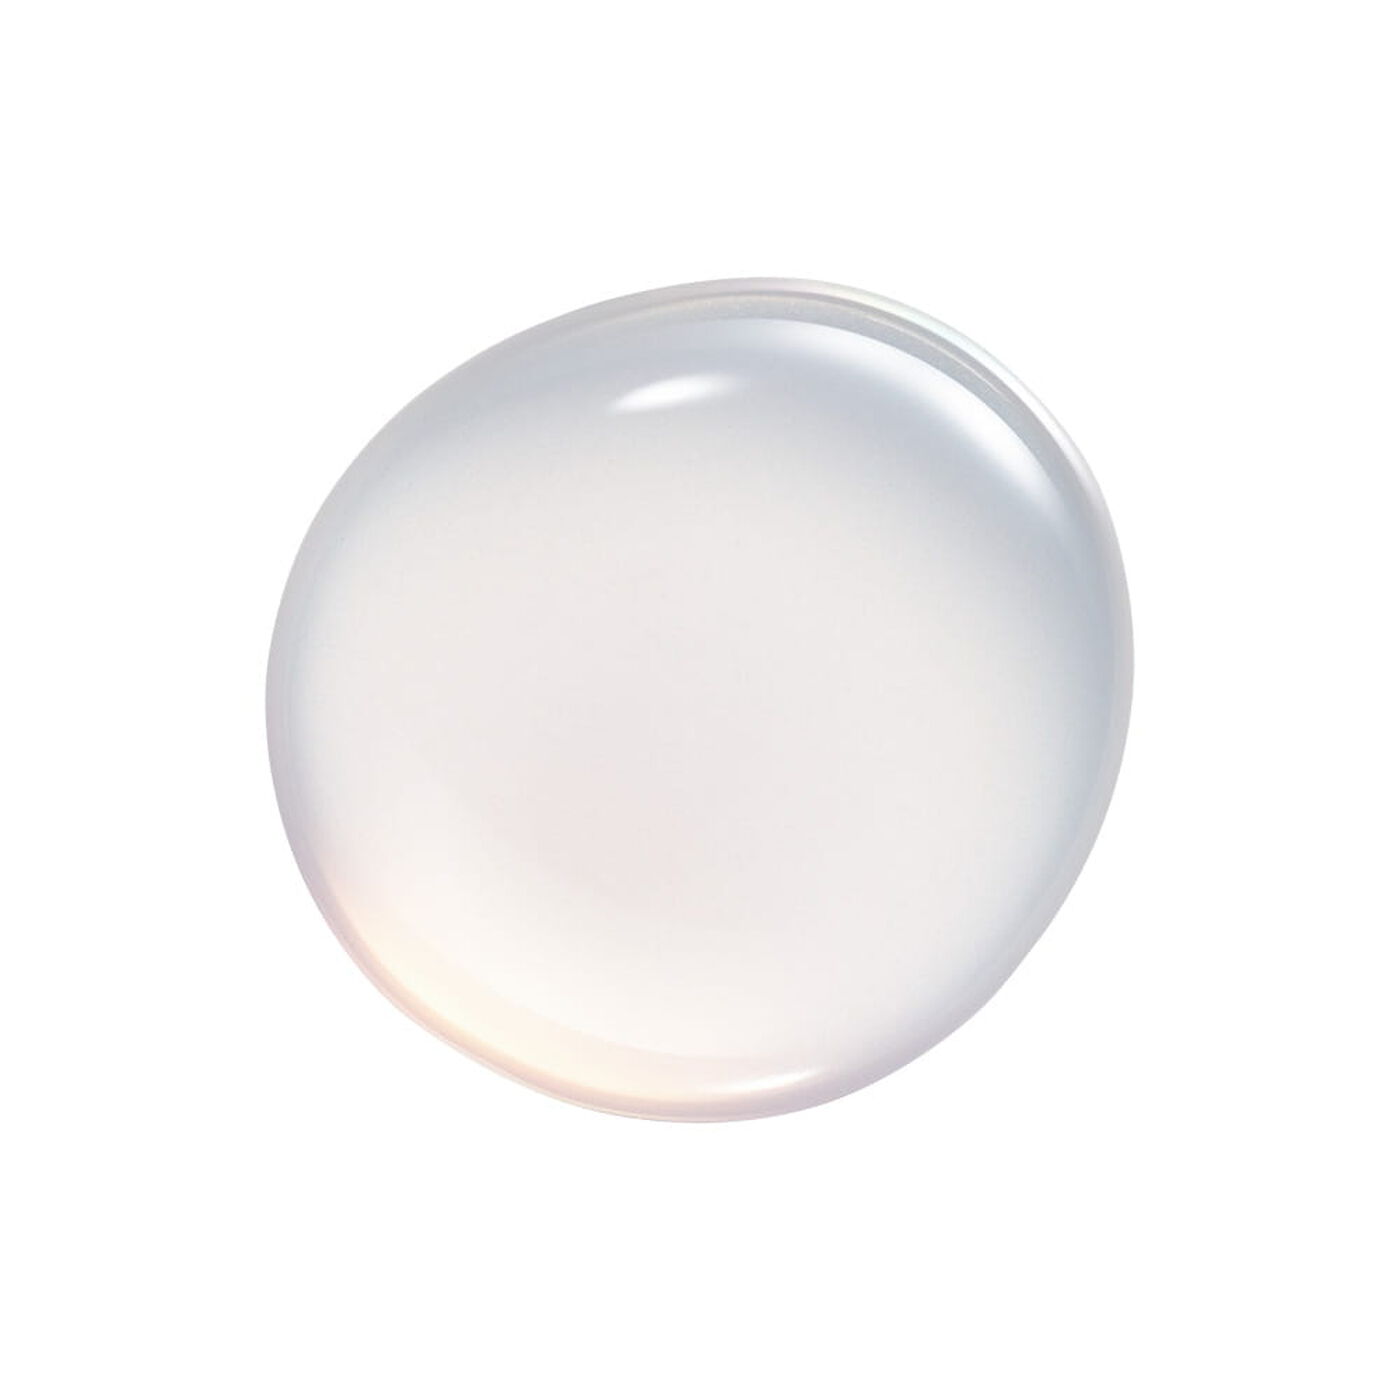 Shiseido VITAL PERFECTION White Revitalizing Softener 150mL